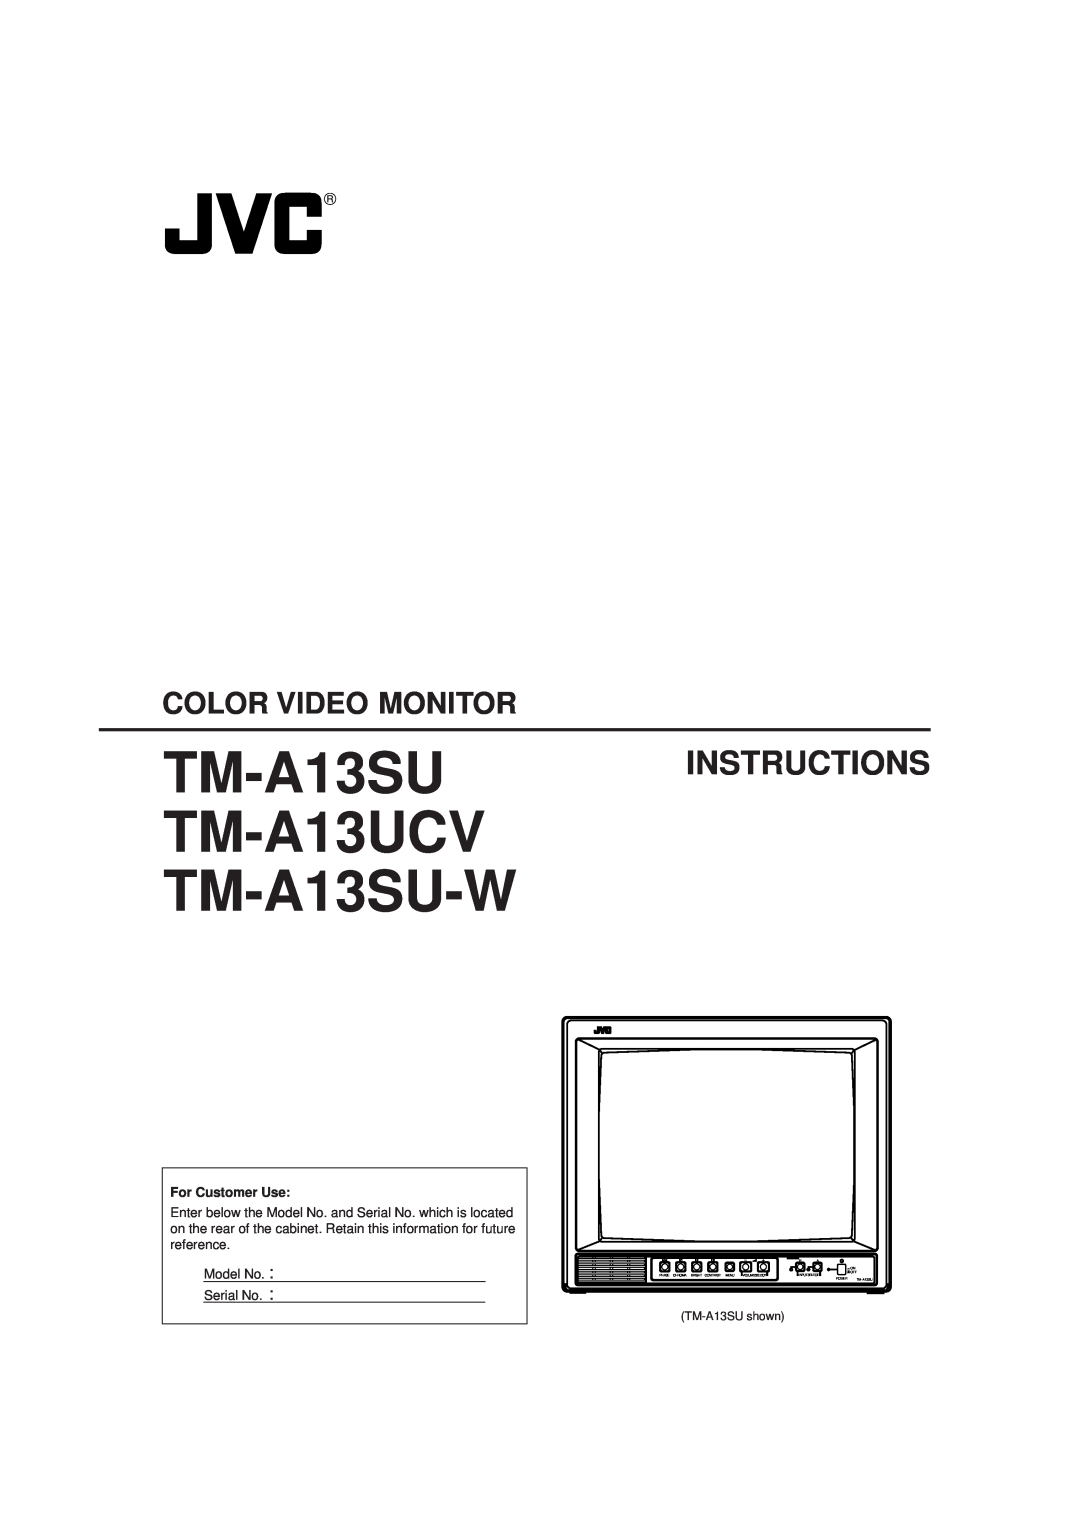 JVC manual Color Video Monitor, TM-A13SU TM-A13UCV TM-A13SU-W, Instructions, Phase Chroma Bright Contrast Menu, Power 